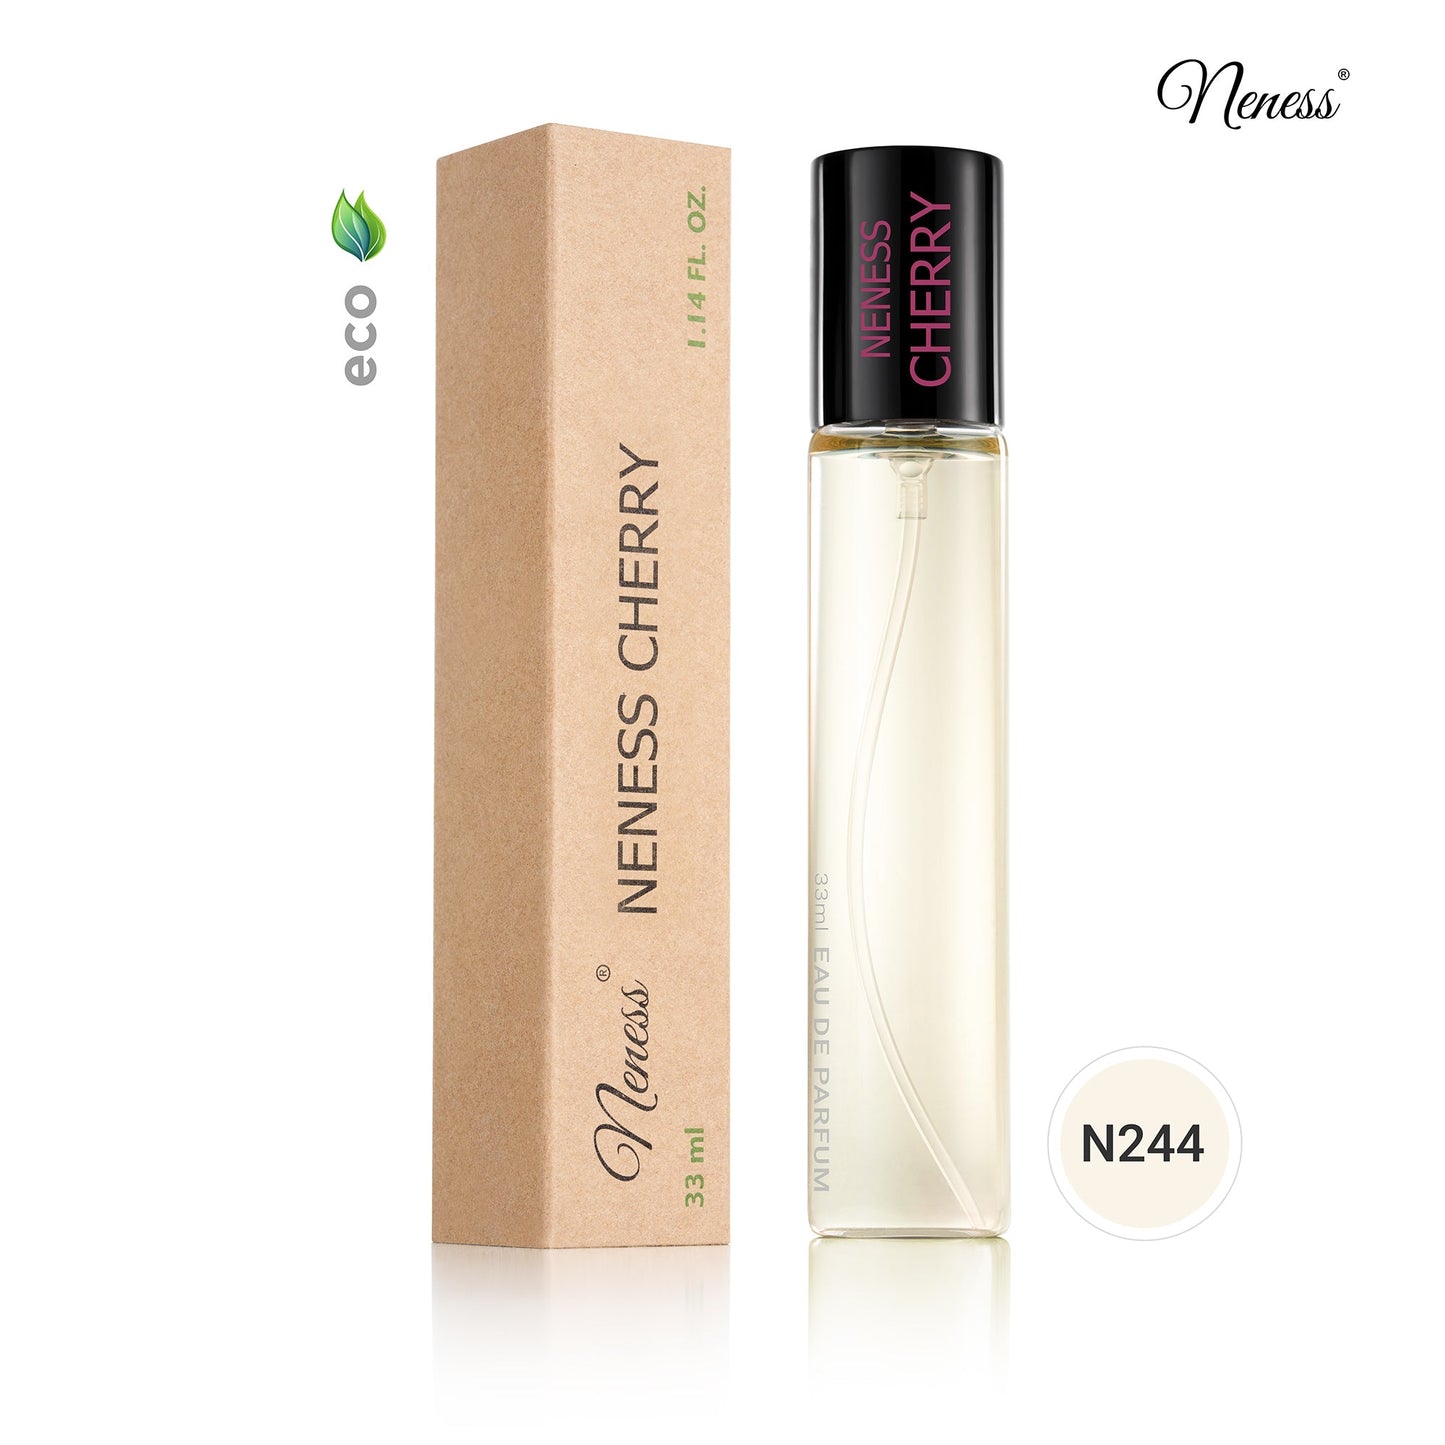 N244. Neness Cherry - 33 ml - Parfums unisexes